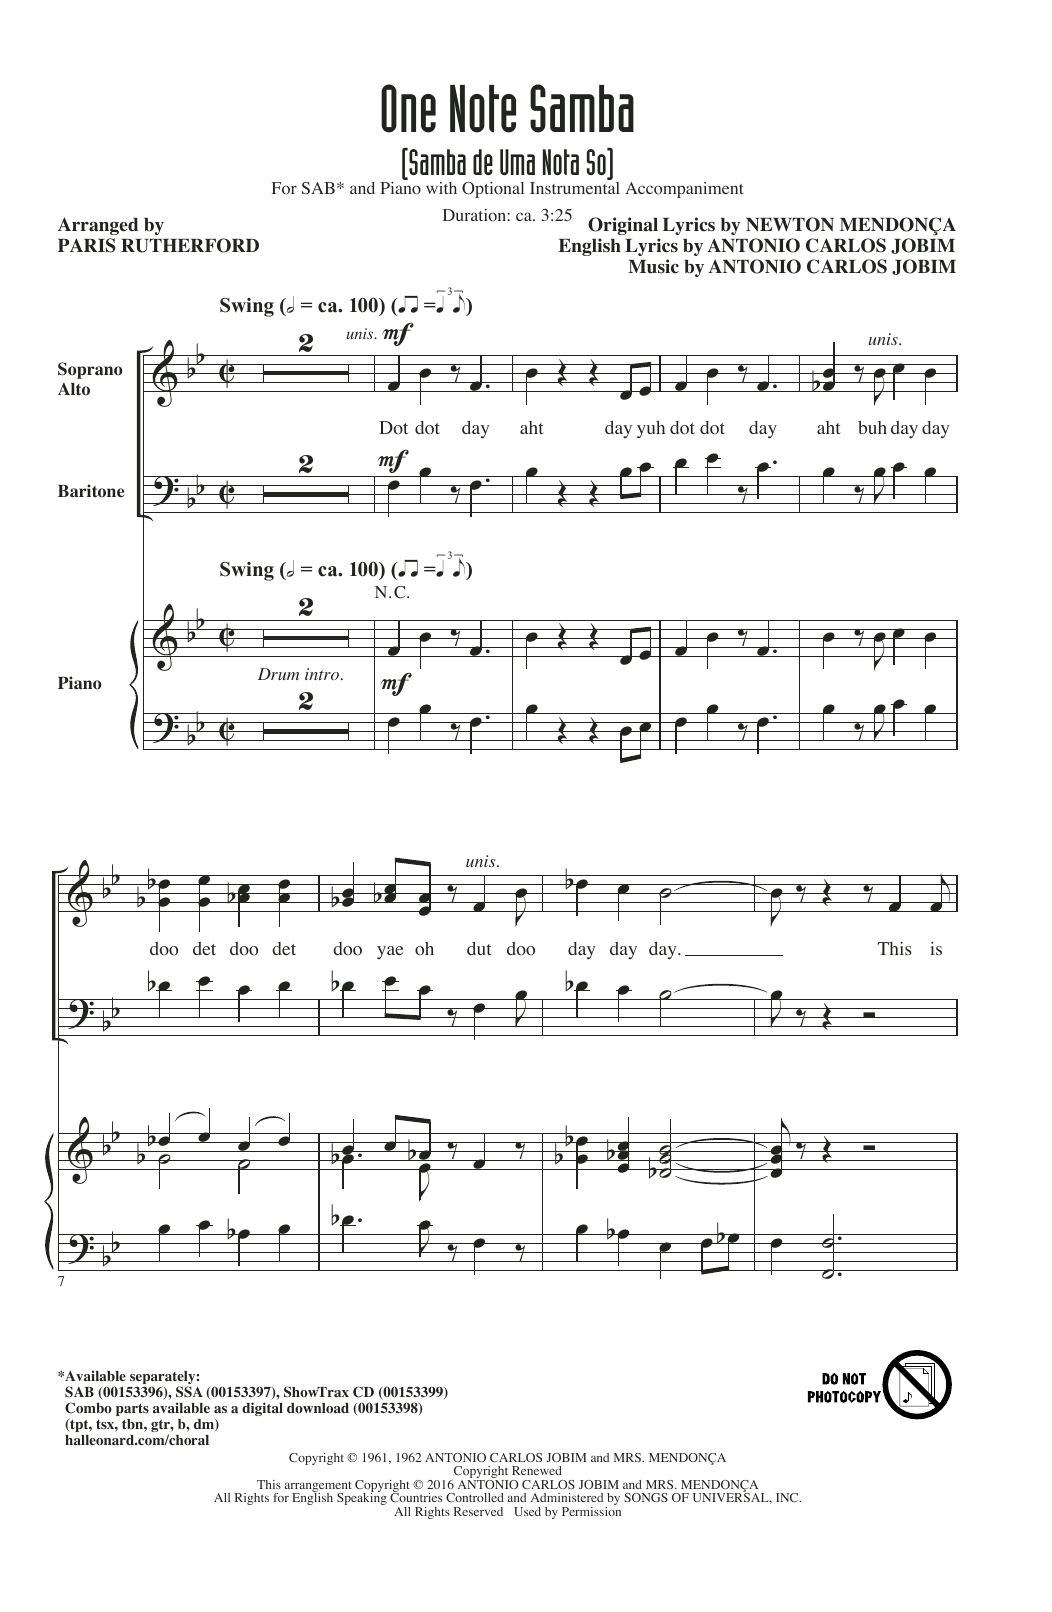 Download Paris Rutherford One Note Samba (Samba De Uma Nota So) Sheet Music and learn how to play SAB PDF digital score in minutes